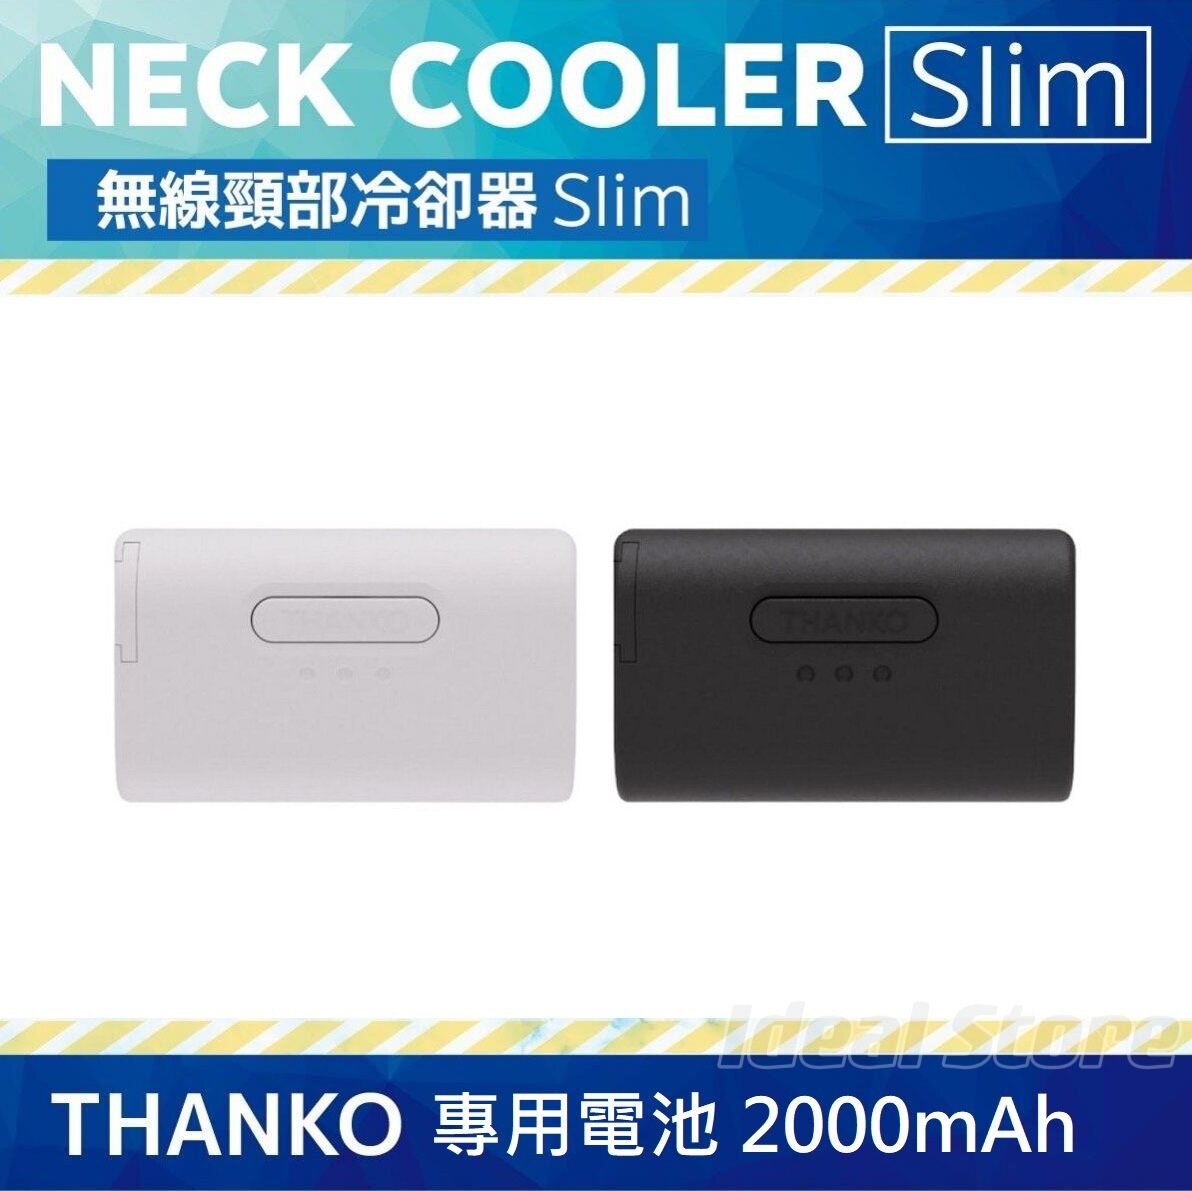 Thanko - Neck Cooler Slim專用電池｜頸掛式｜超薄 (2000mAh)